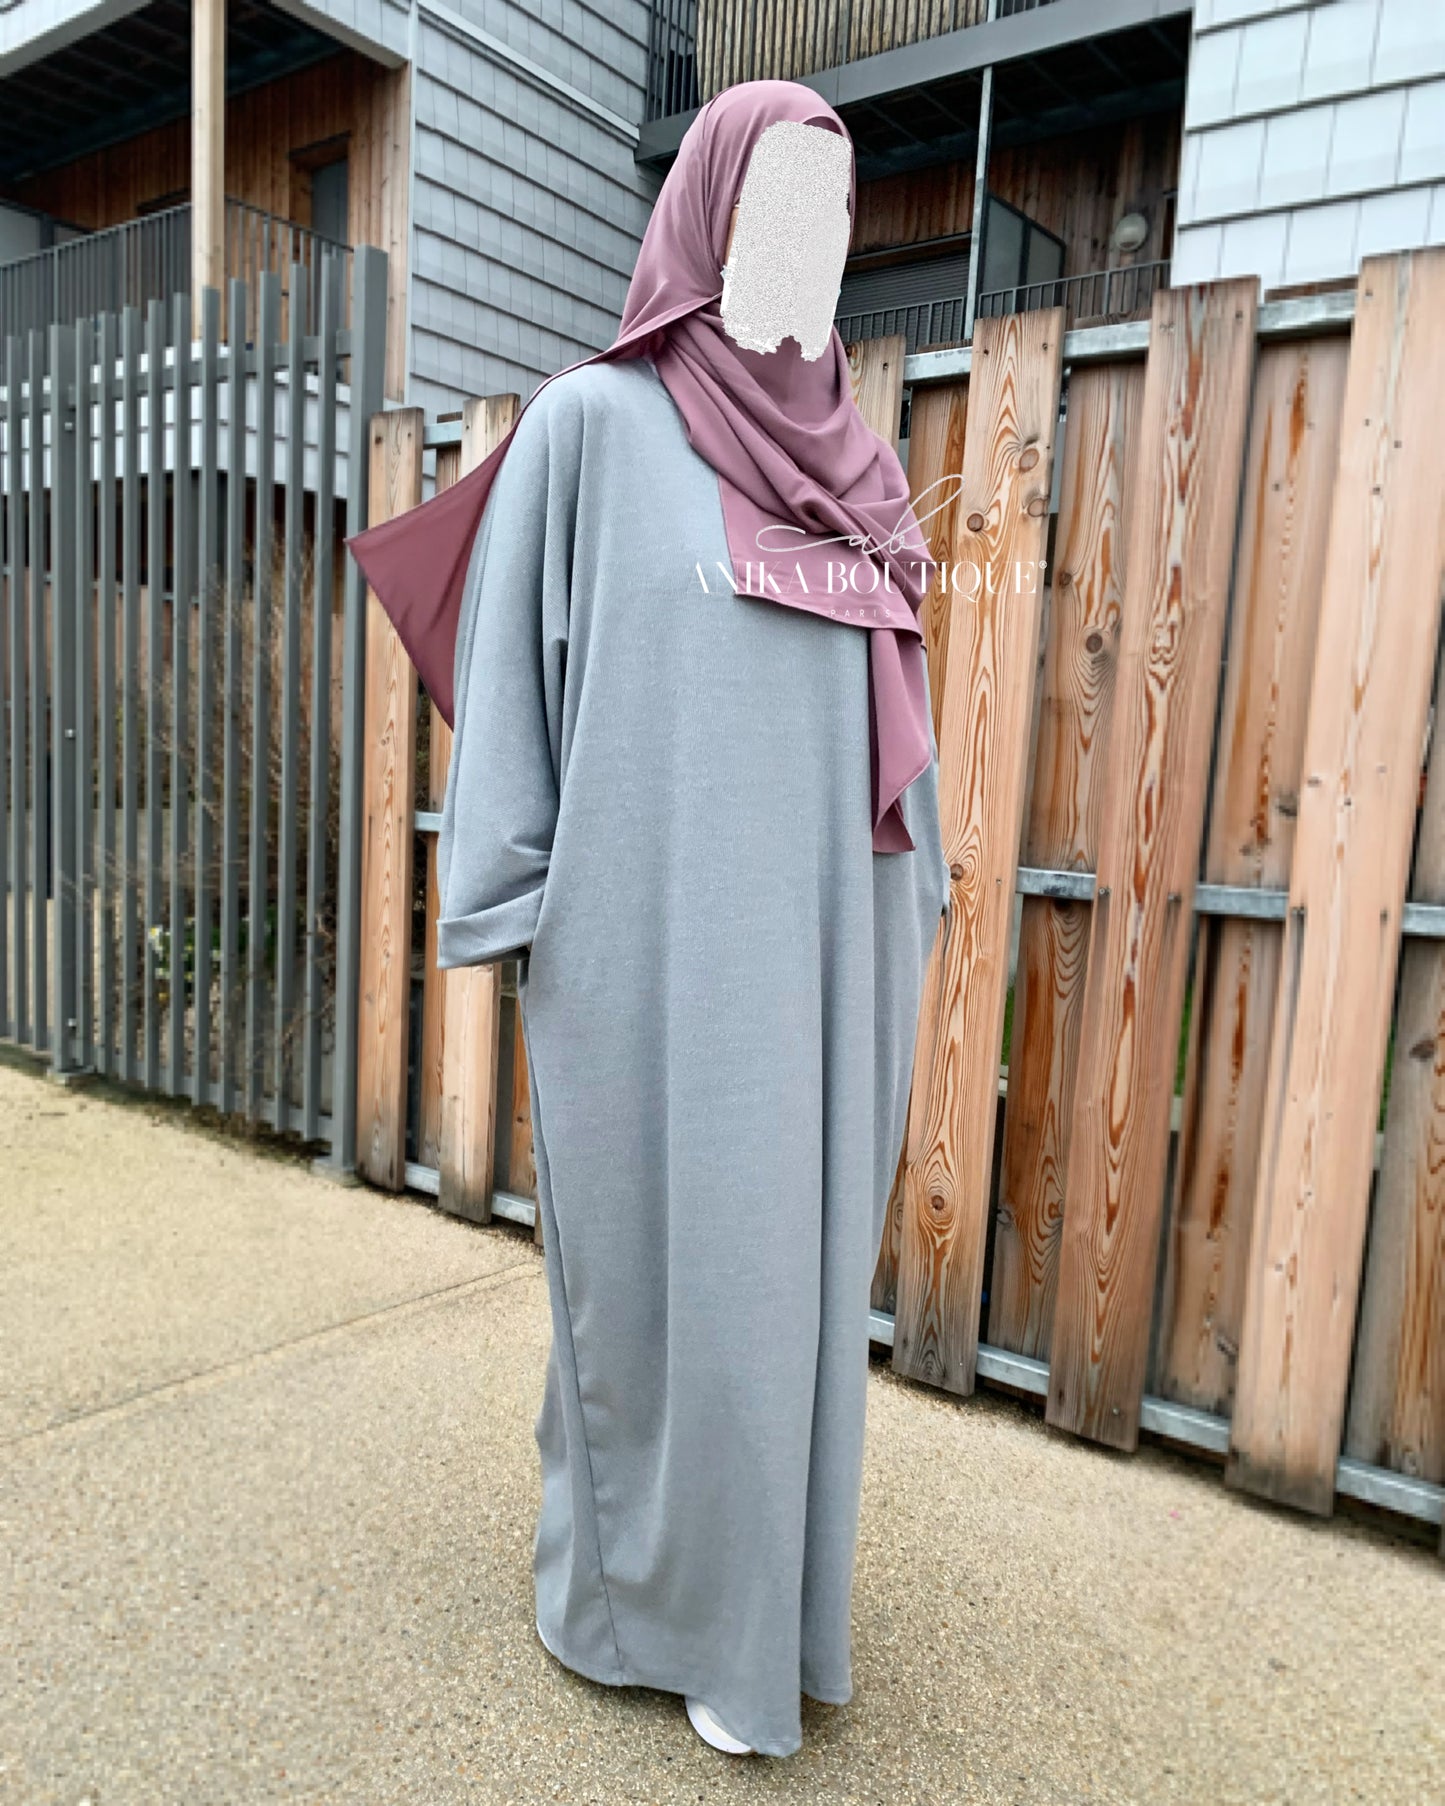 Hijab Soie de Medine made in Turquie